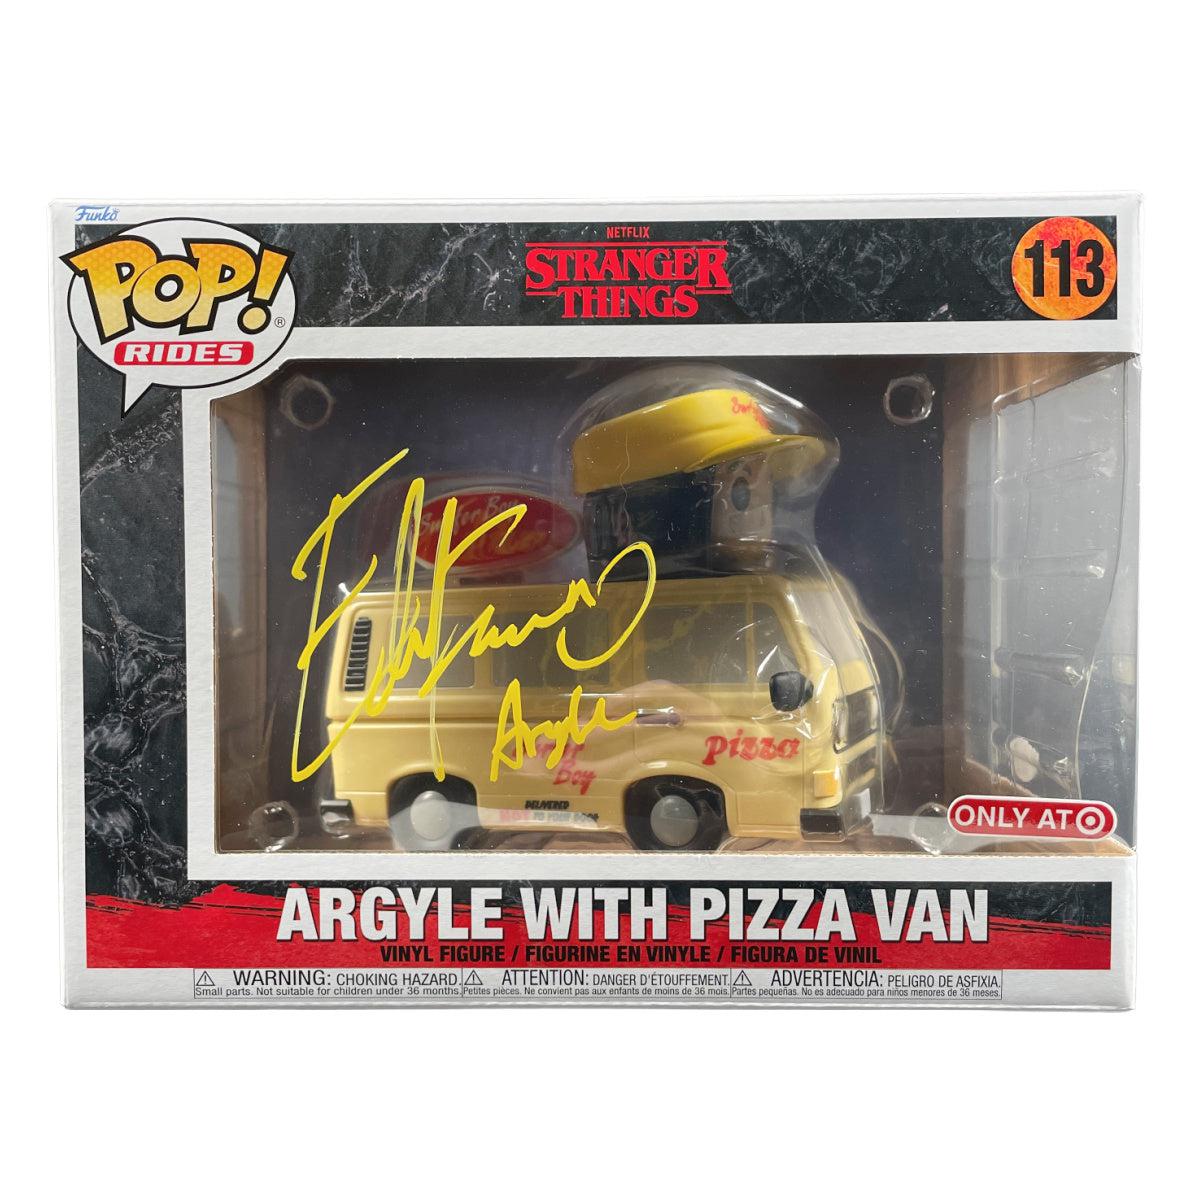 Eduardo Franco Signed Funko POP Stranger Things Argyle with Pizza Van  Autograph JSA